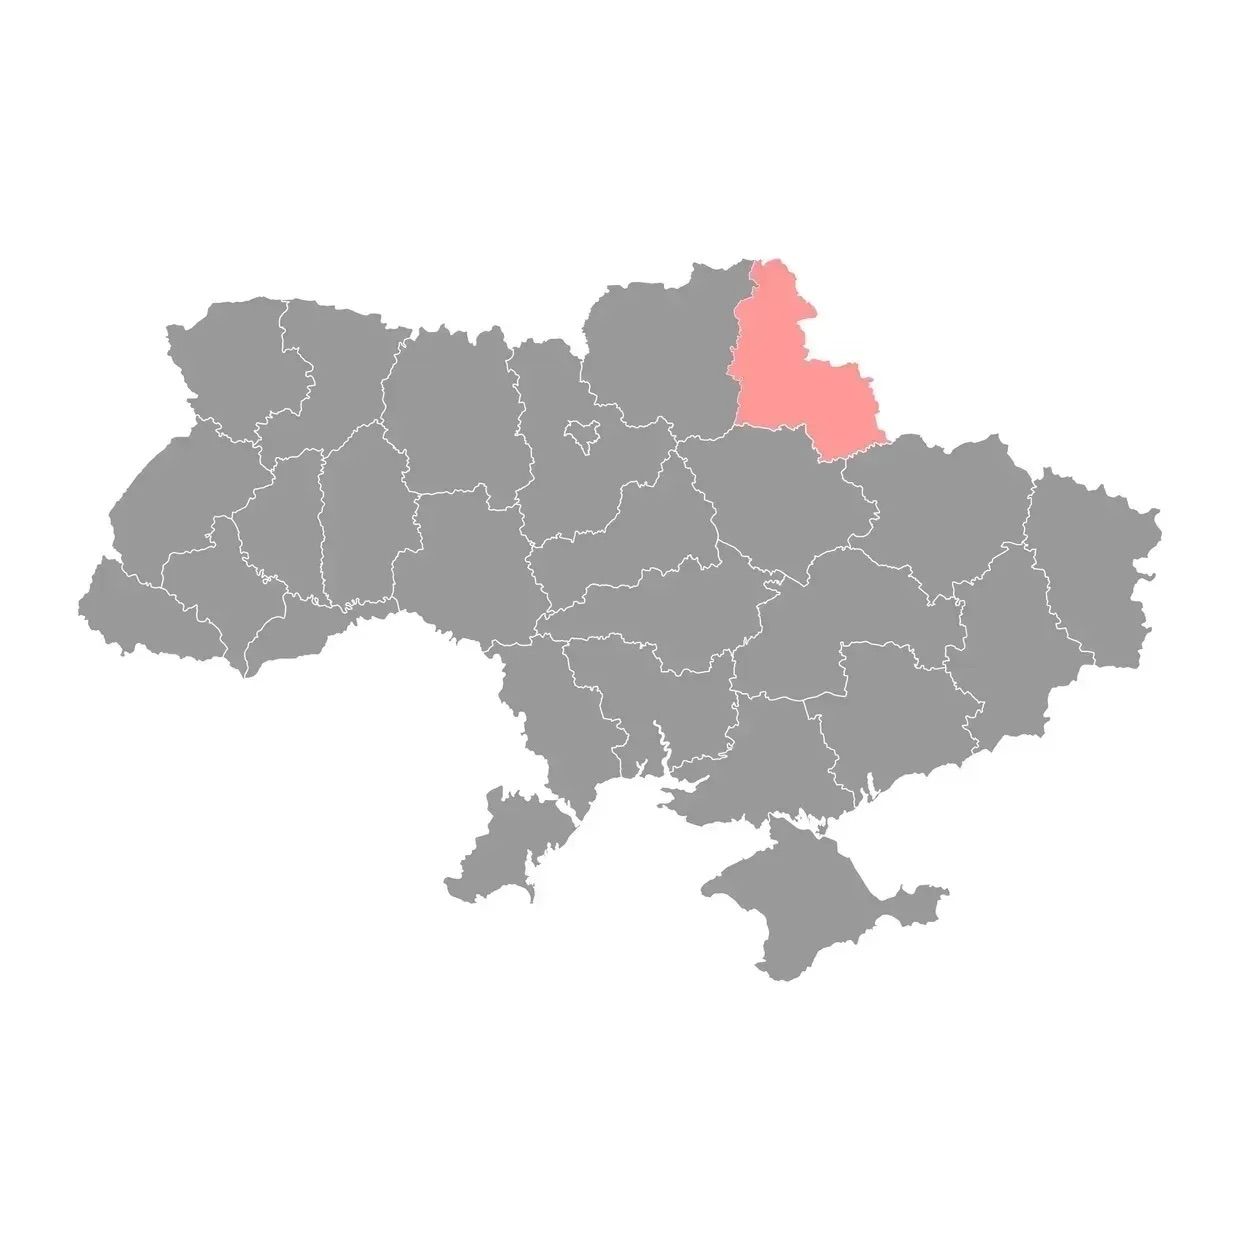 Russia attacks 11 communities in Sumy Oblast